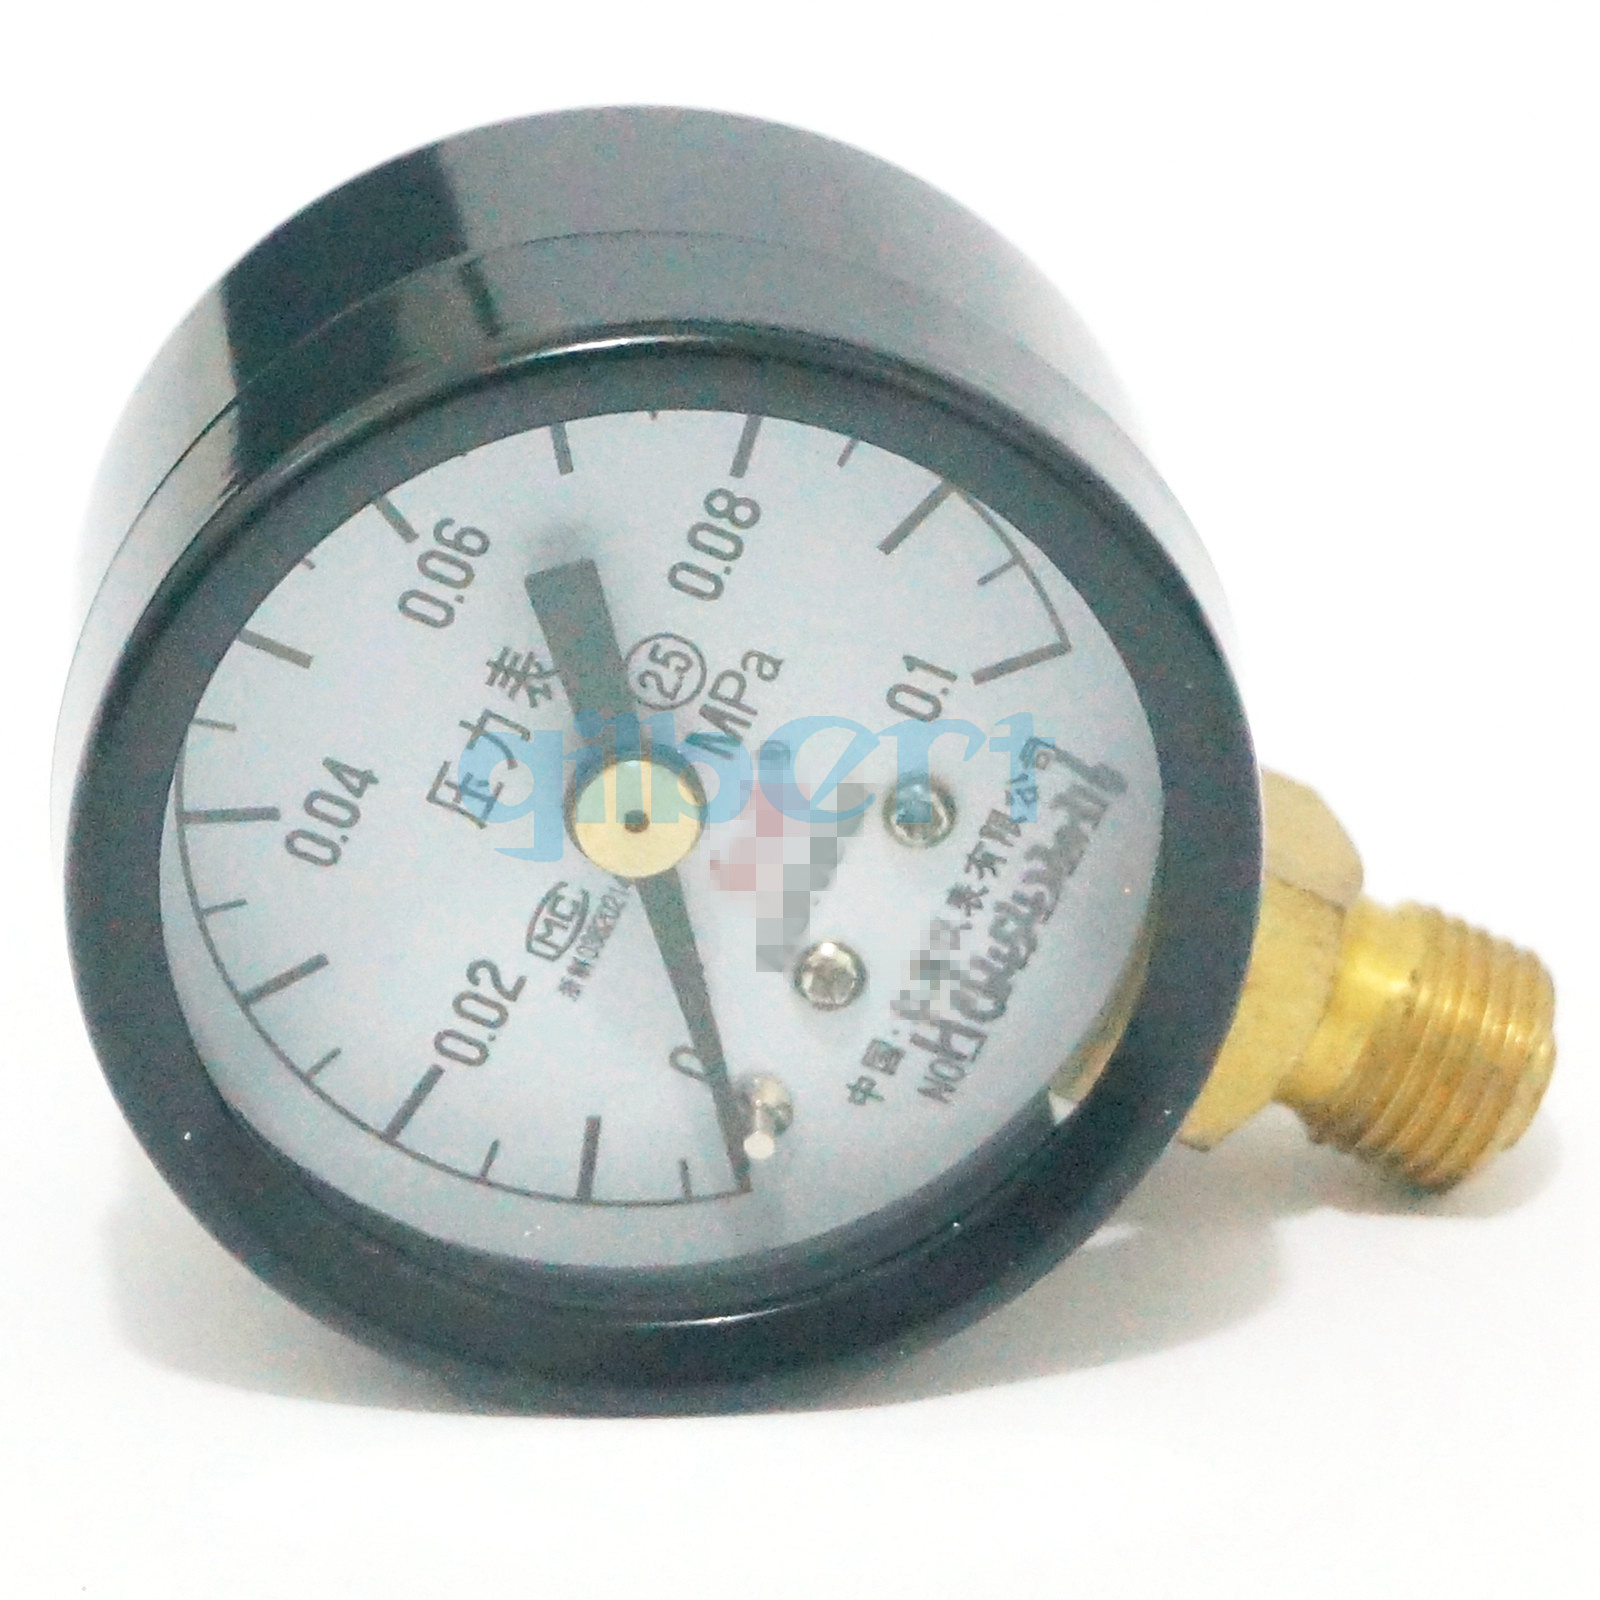 0-6Mpa Y-40 Diam 40mm M10x1 Radial Mount Air Compressor Pressure Gauge Dial 